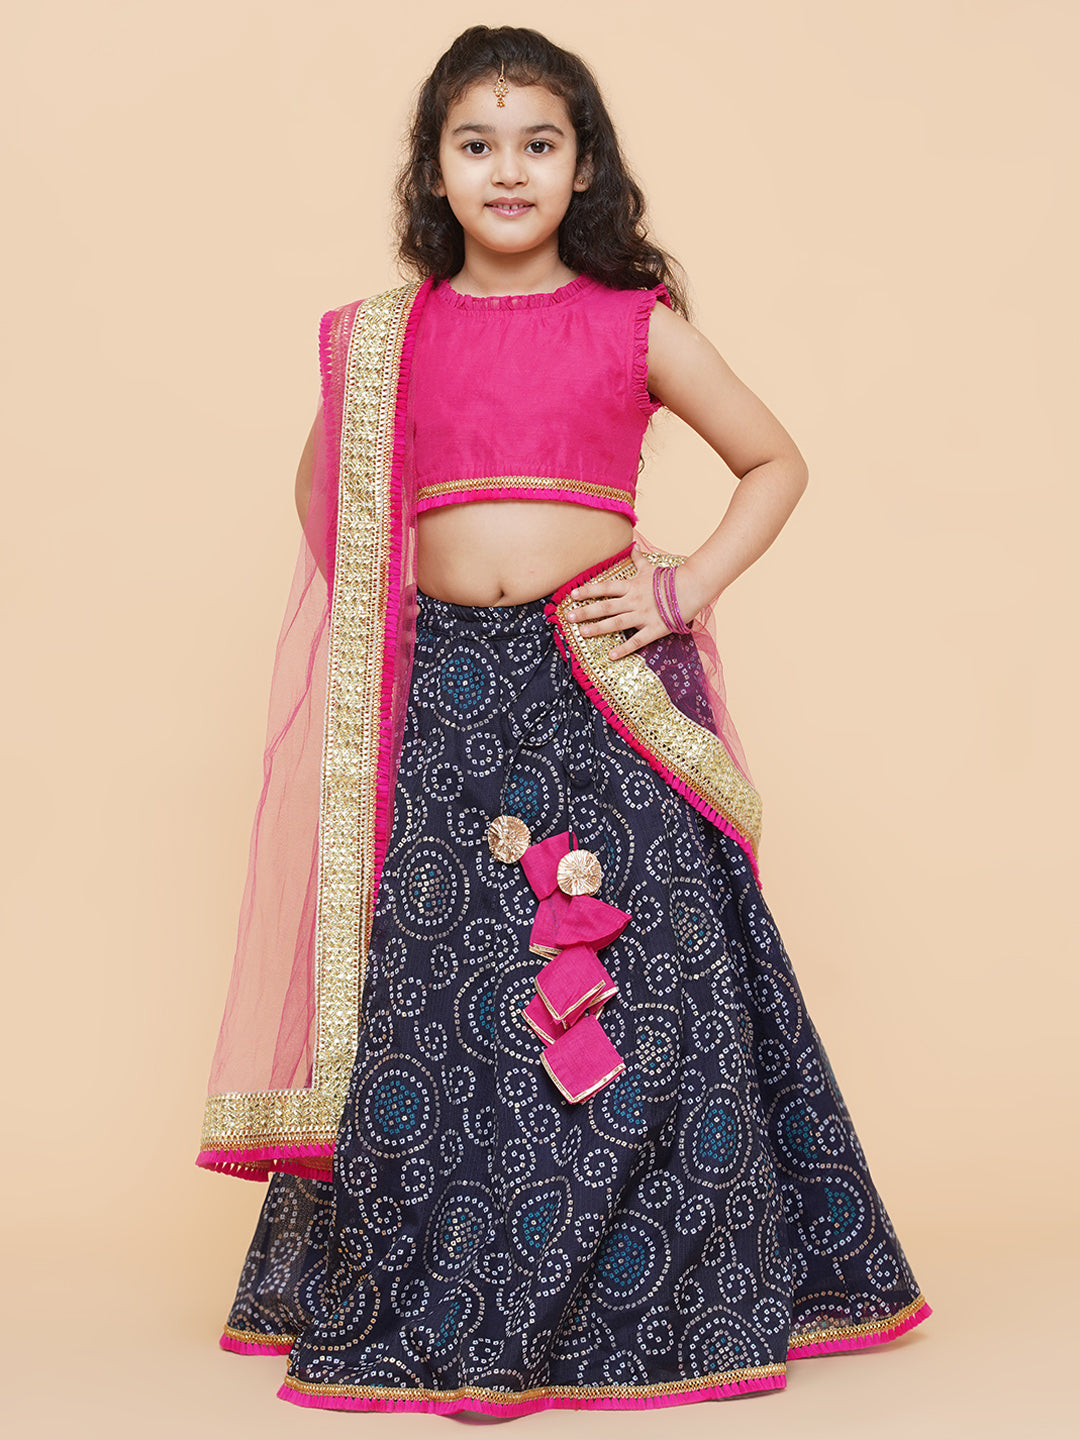 Buy Ethnic Wear For Baby Girls/Girls Lehenga Choli with Dupatta/Chaniya  Choli/Traditional Garba Dress for Kids (12-18 Months) at Amazon.in